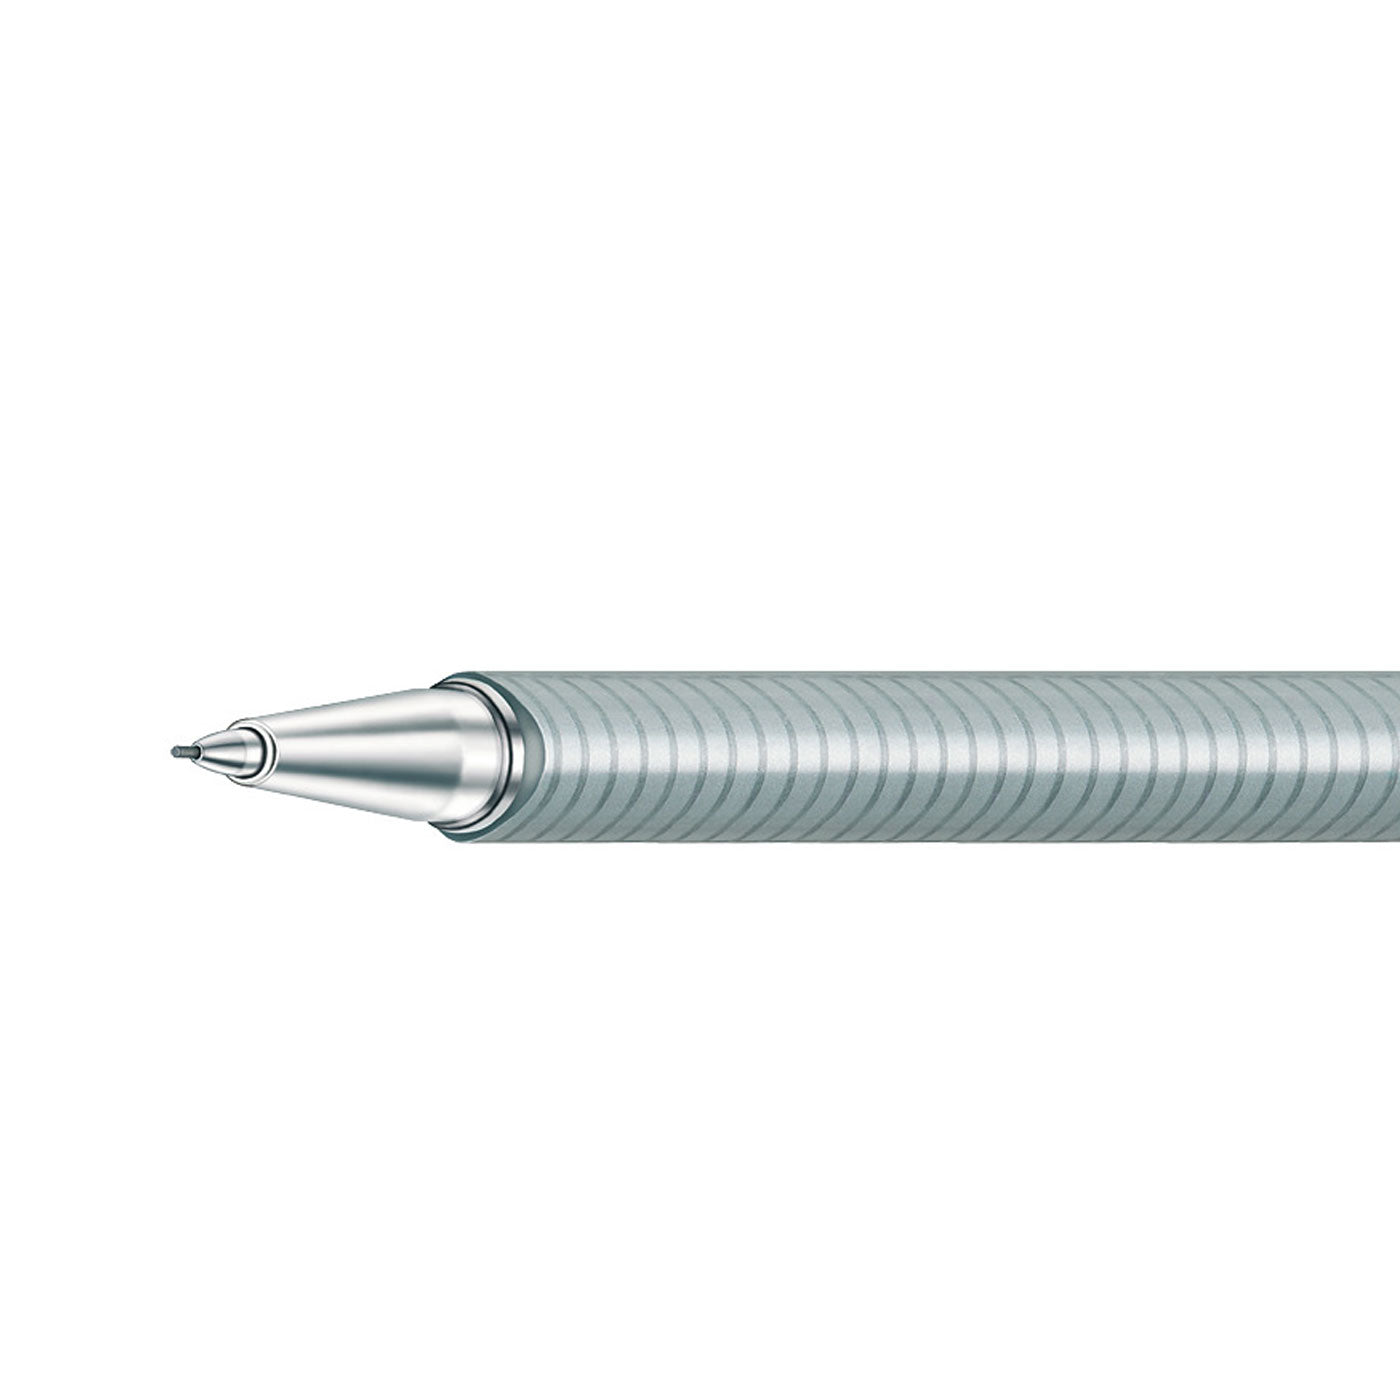 Staedtler Triplus Micro Mechanical Pencil 774 Triangular 0.5mm